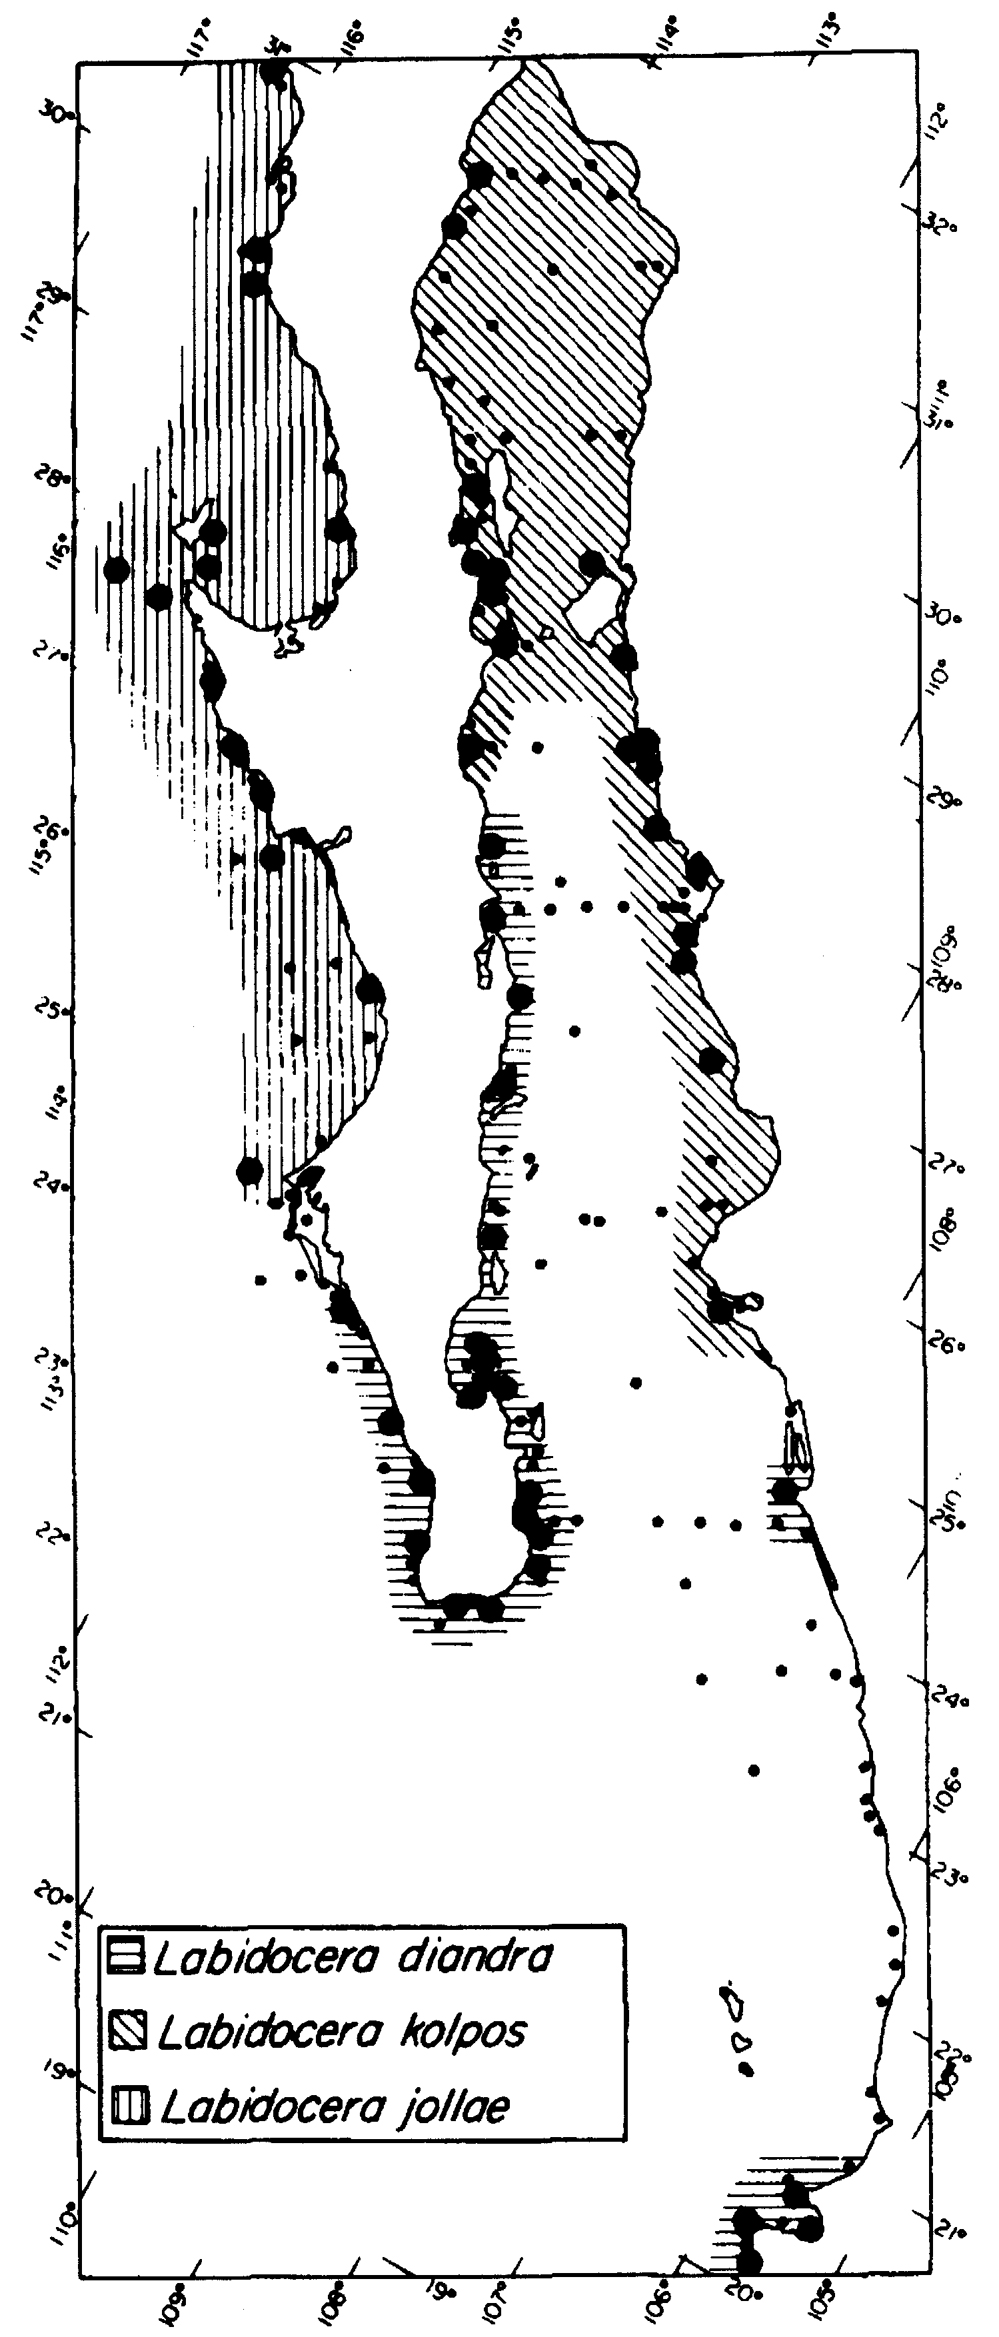 Species Labidocera diandra - Distribution map 2